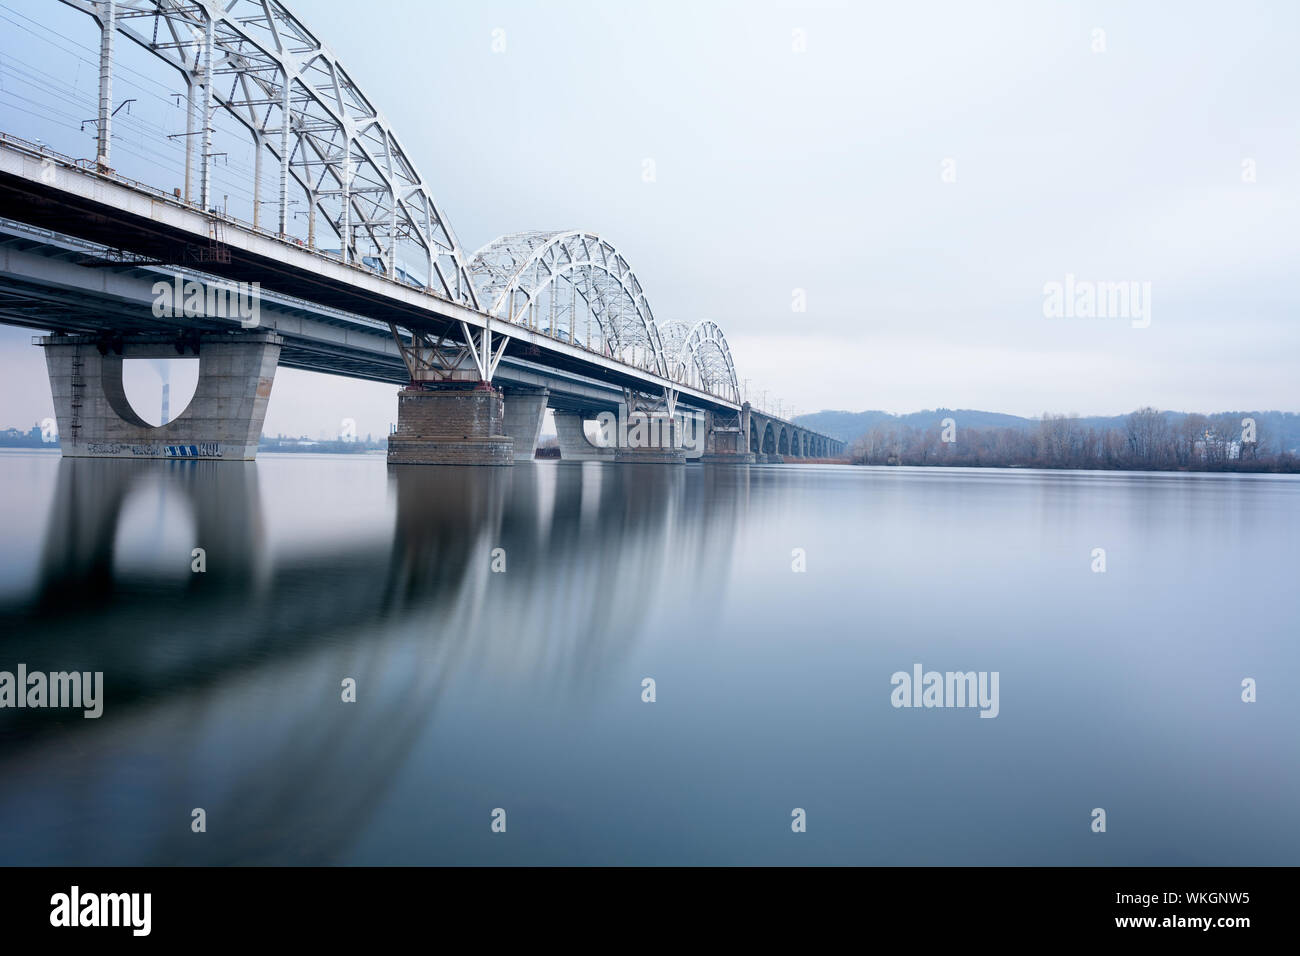 Railway Bridge Over River With Reflection Stock Photo